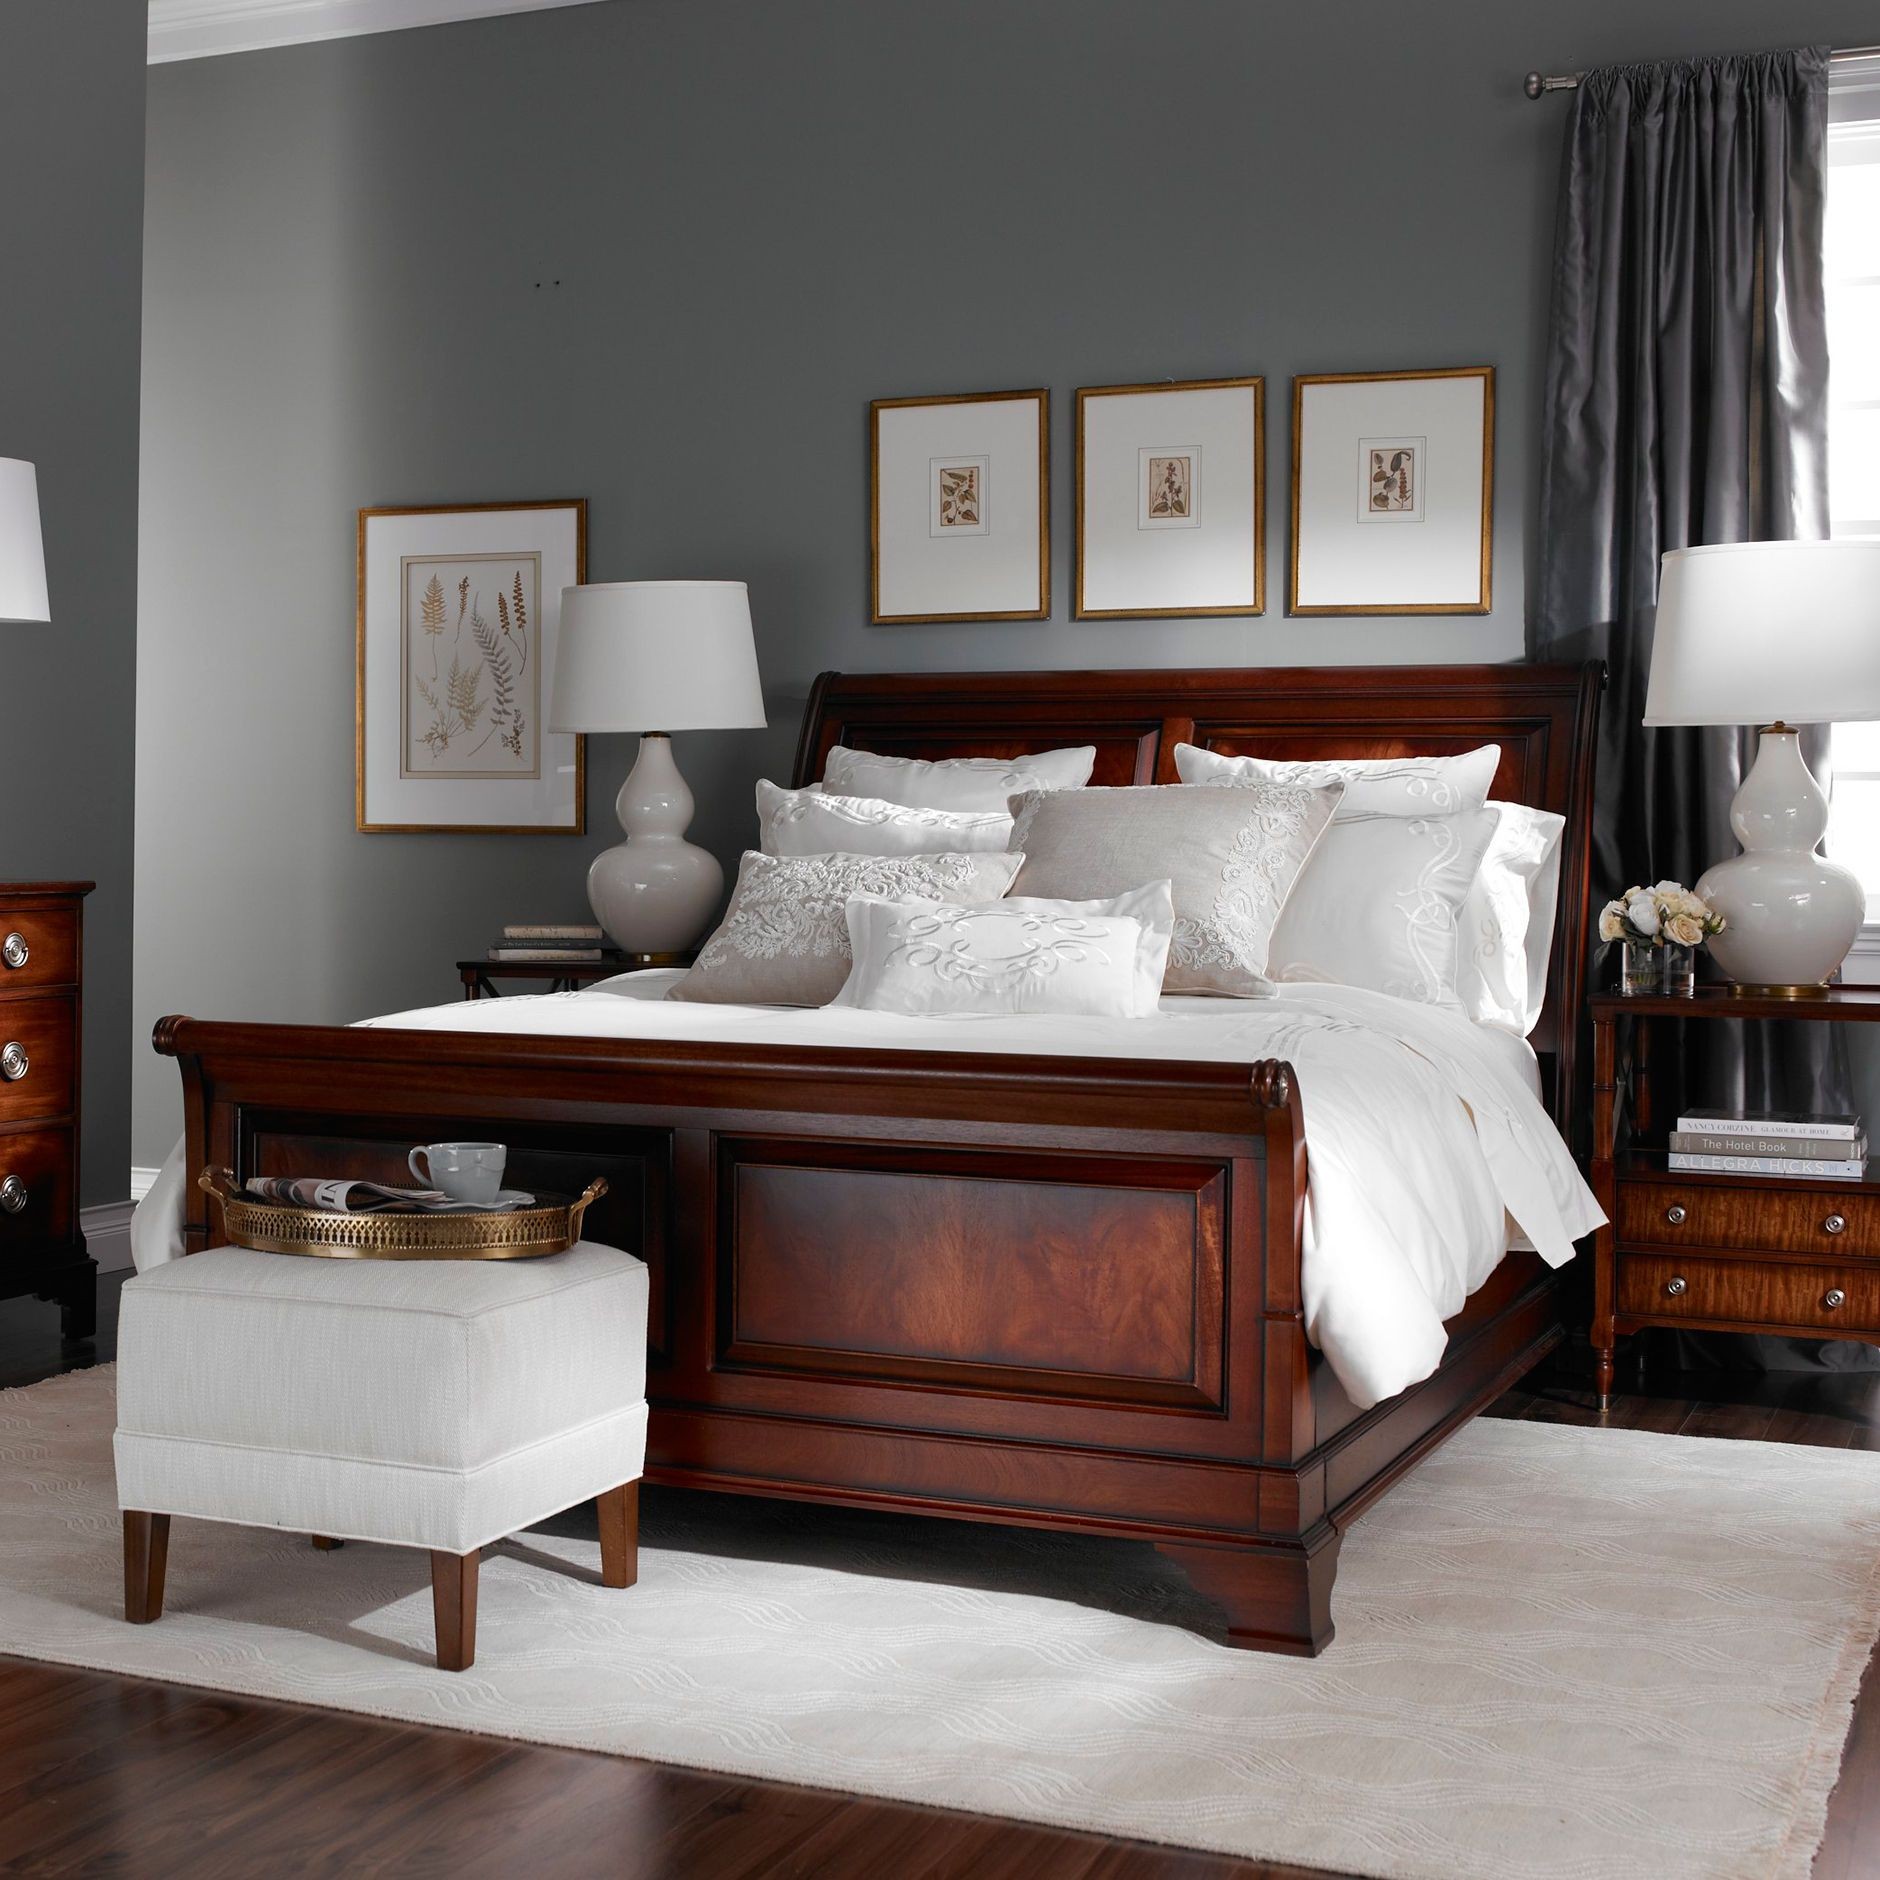 Brown bedroom furniture